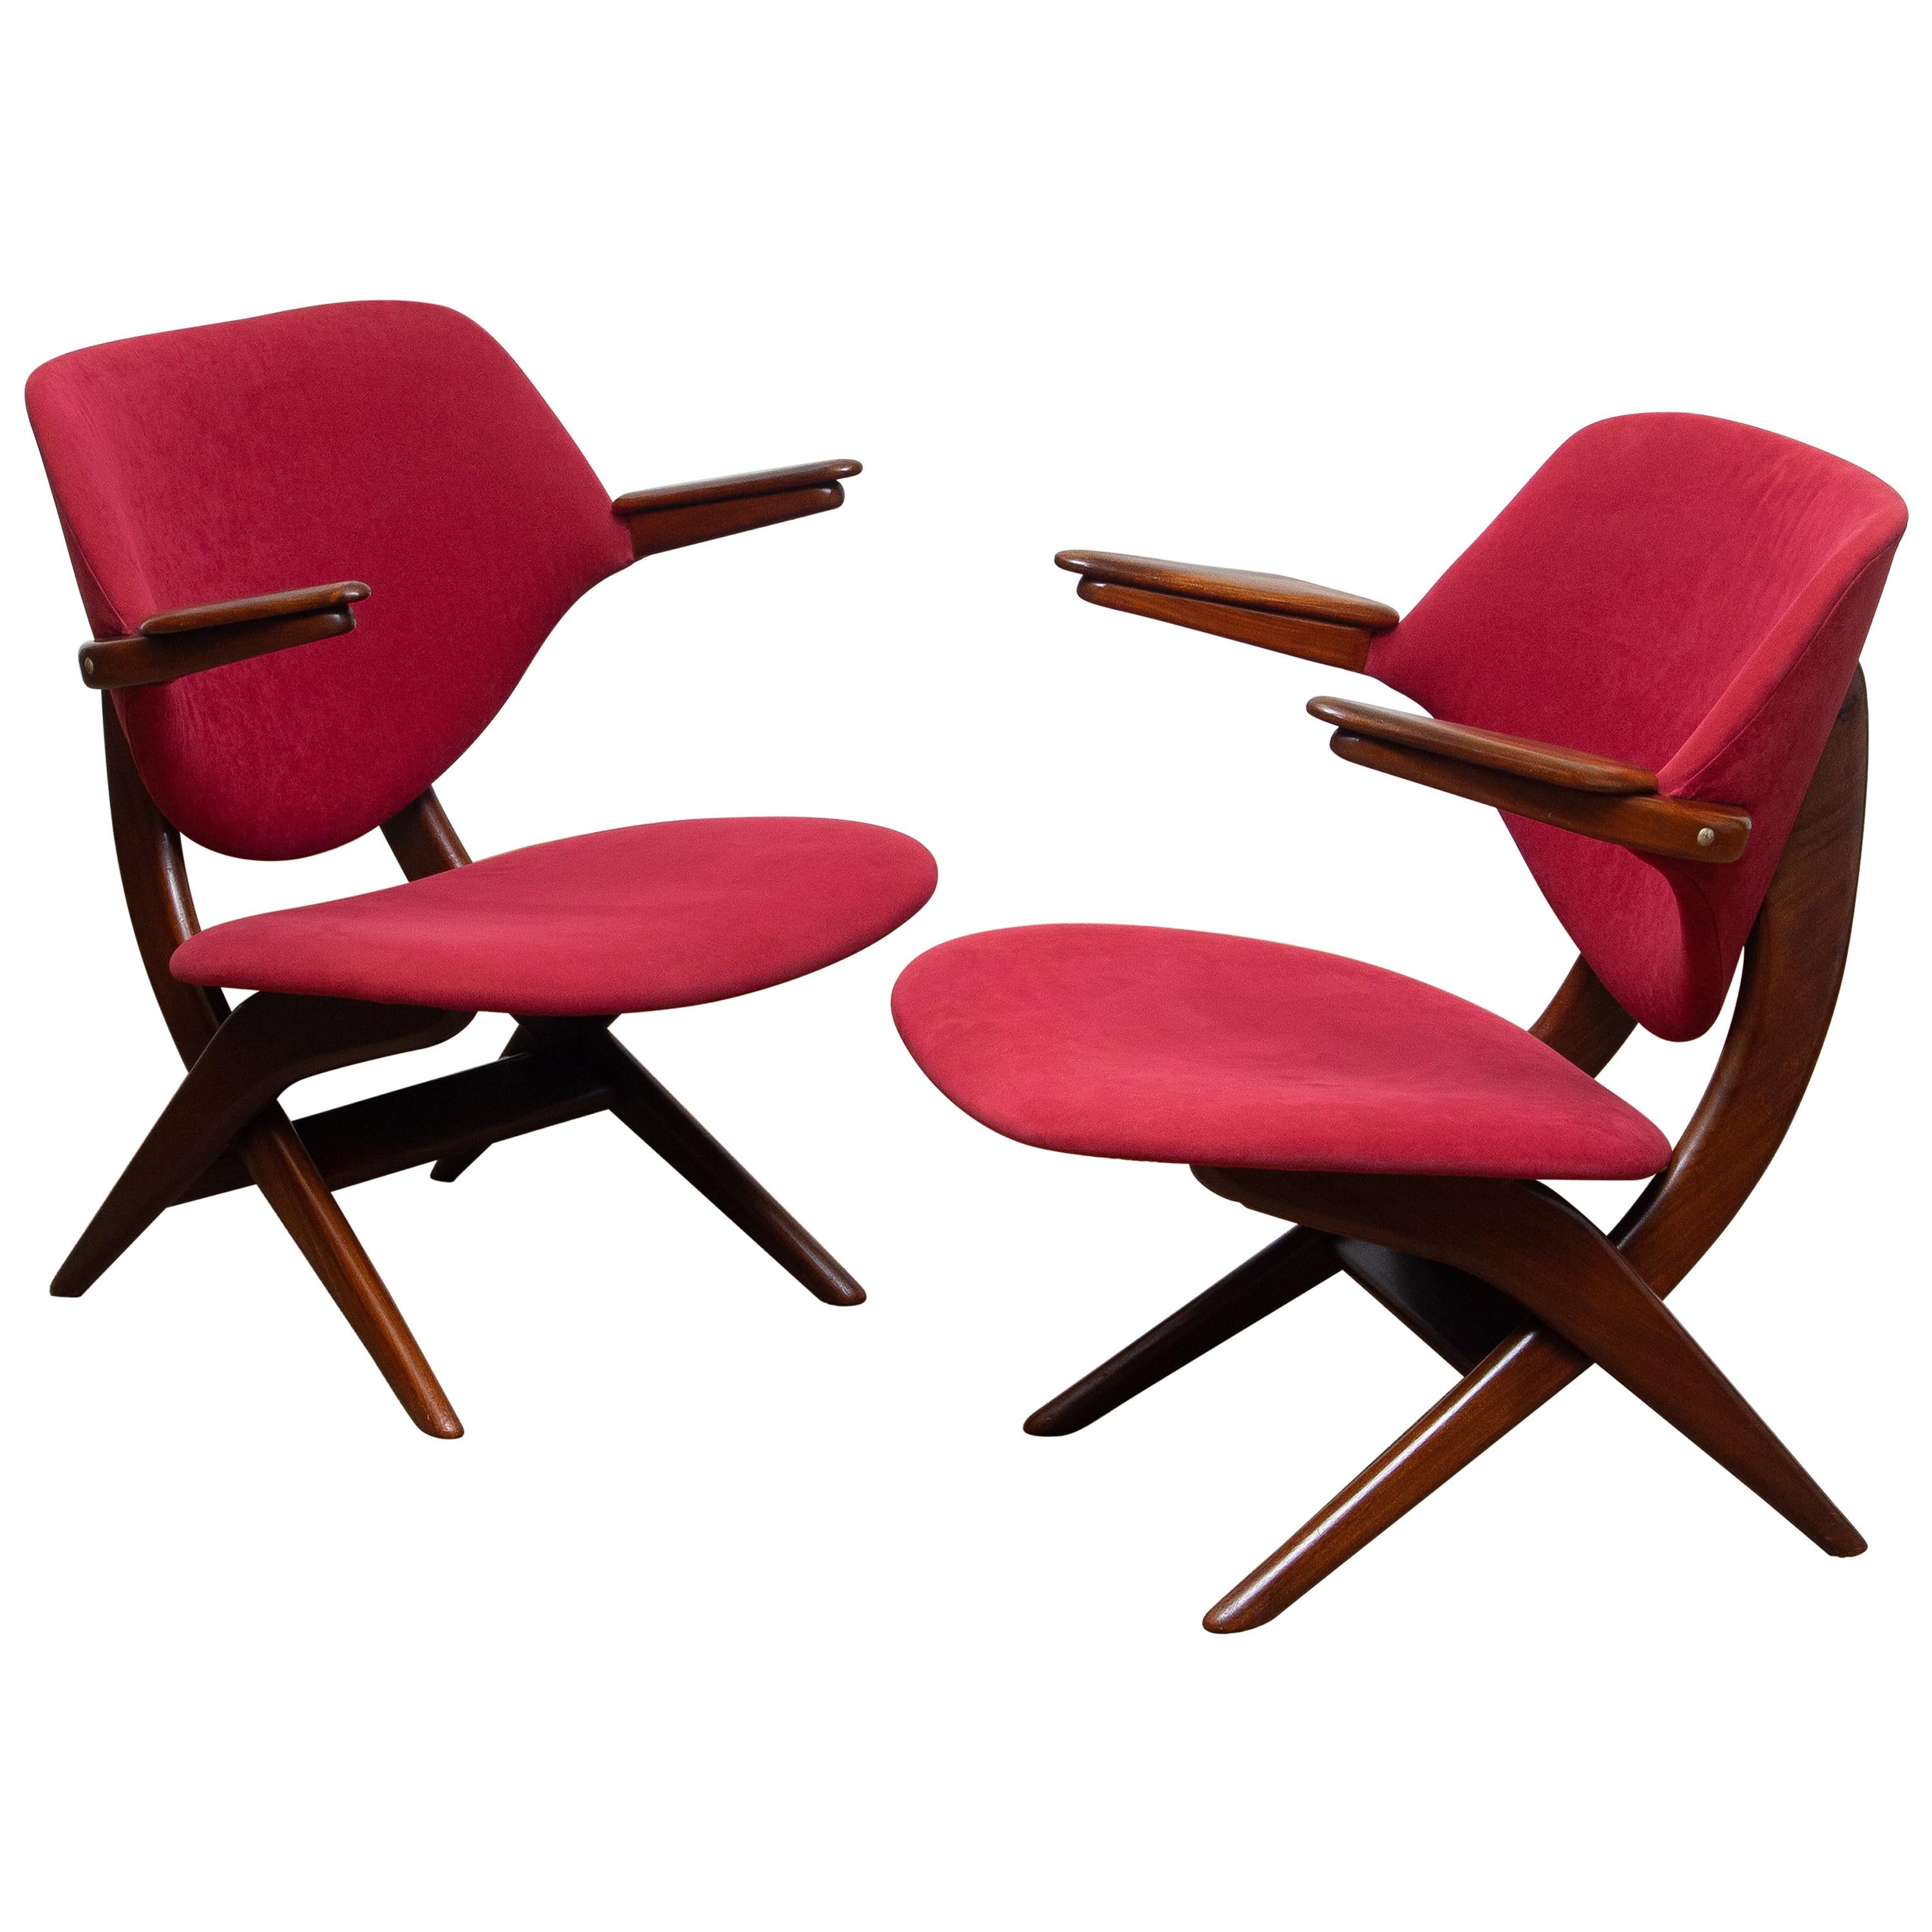 Dutch 1950s, Set of Two Teak Lounge/Easy Chairs by Louis Van Teeffelen for Wébé